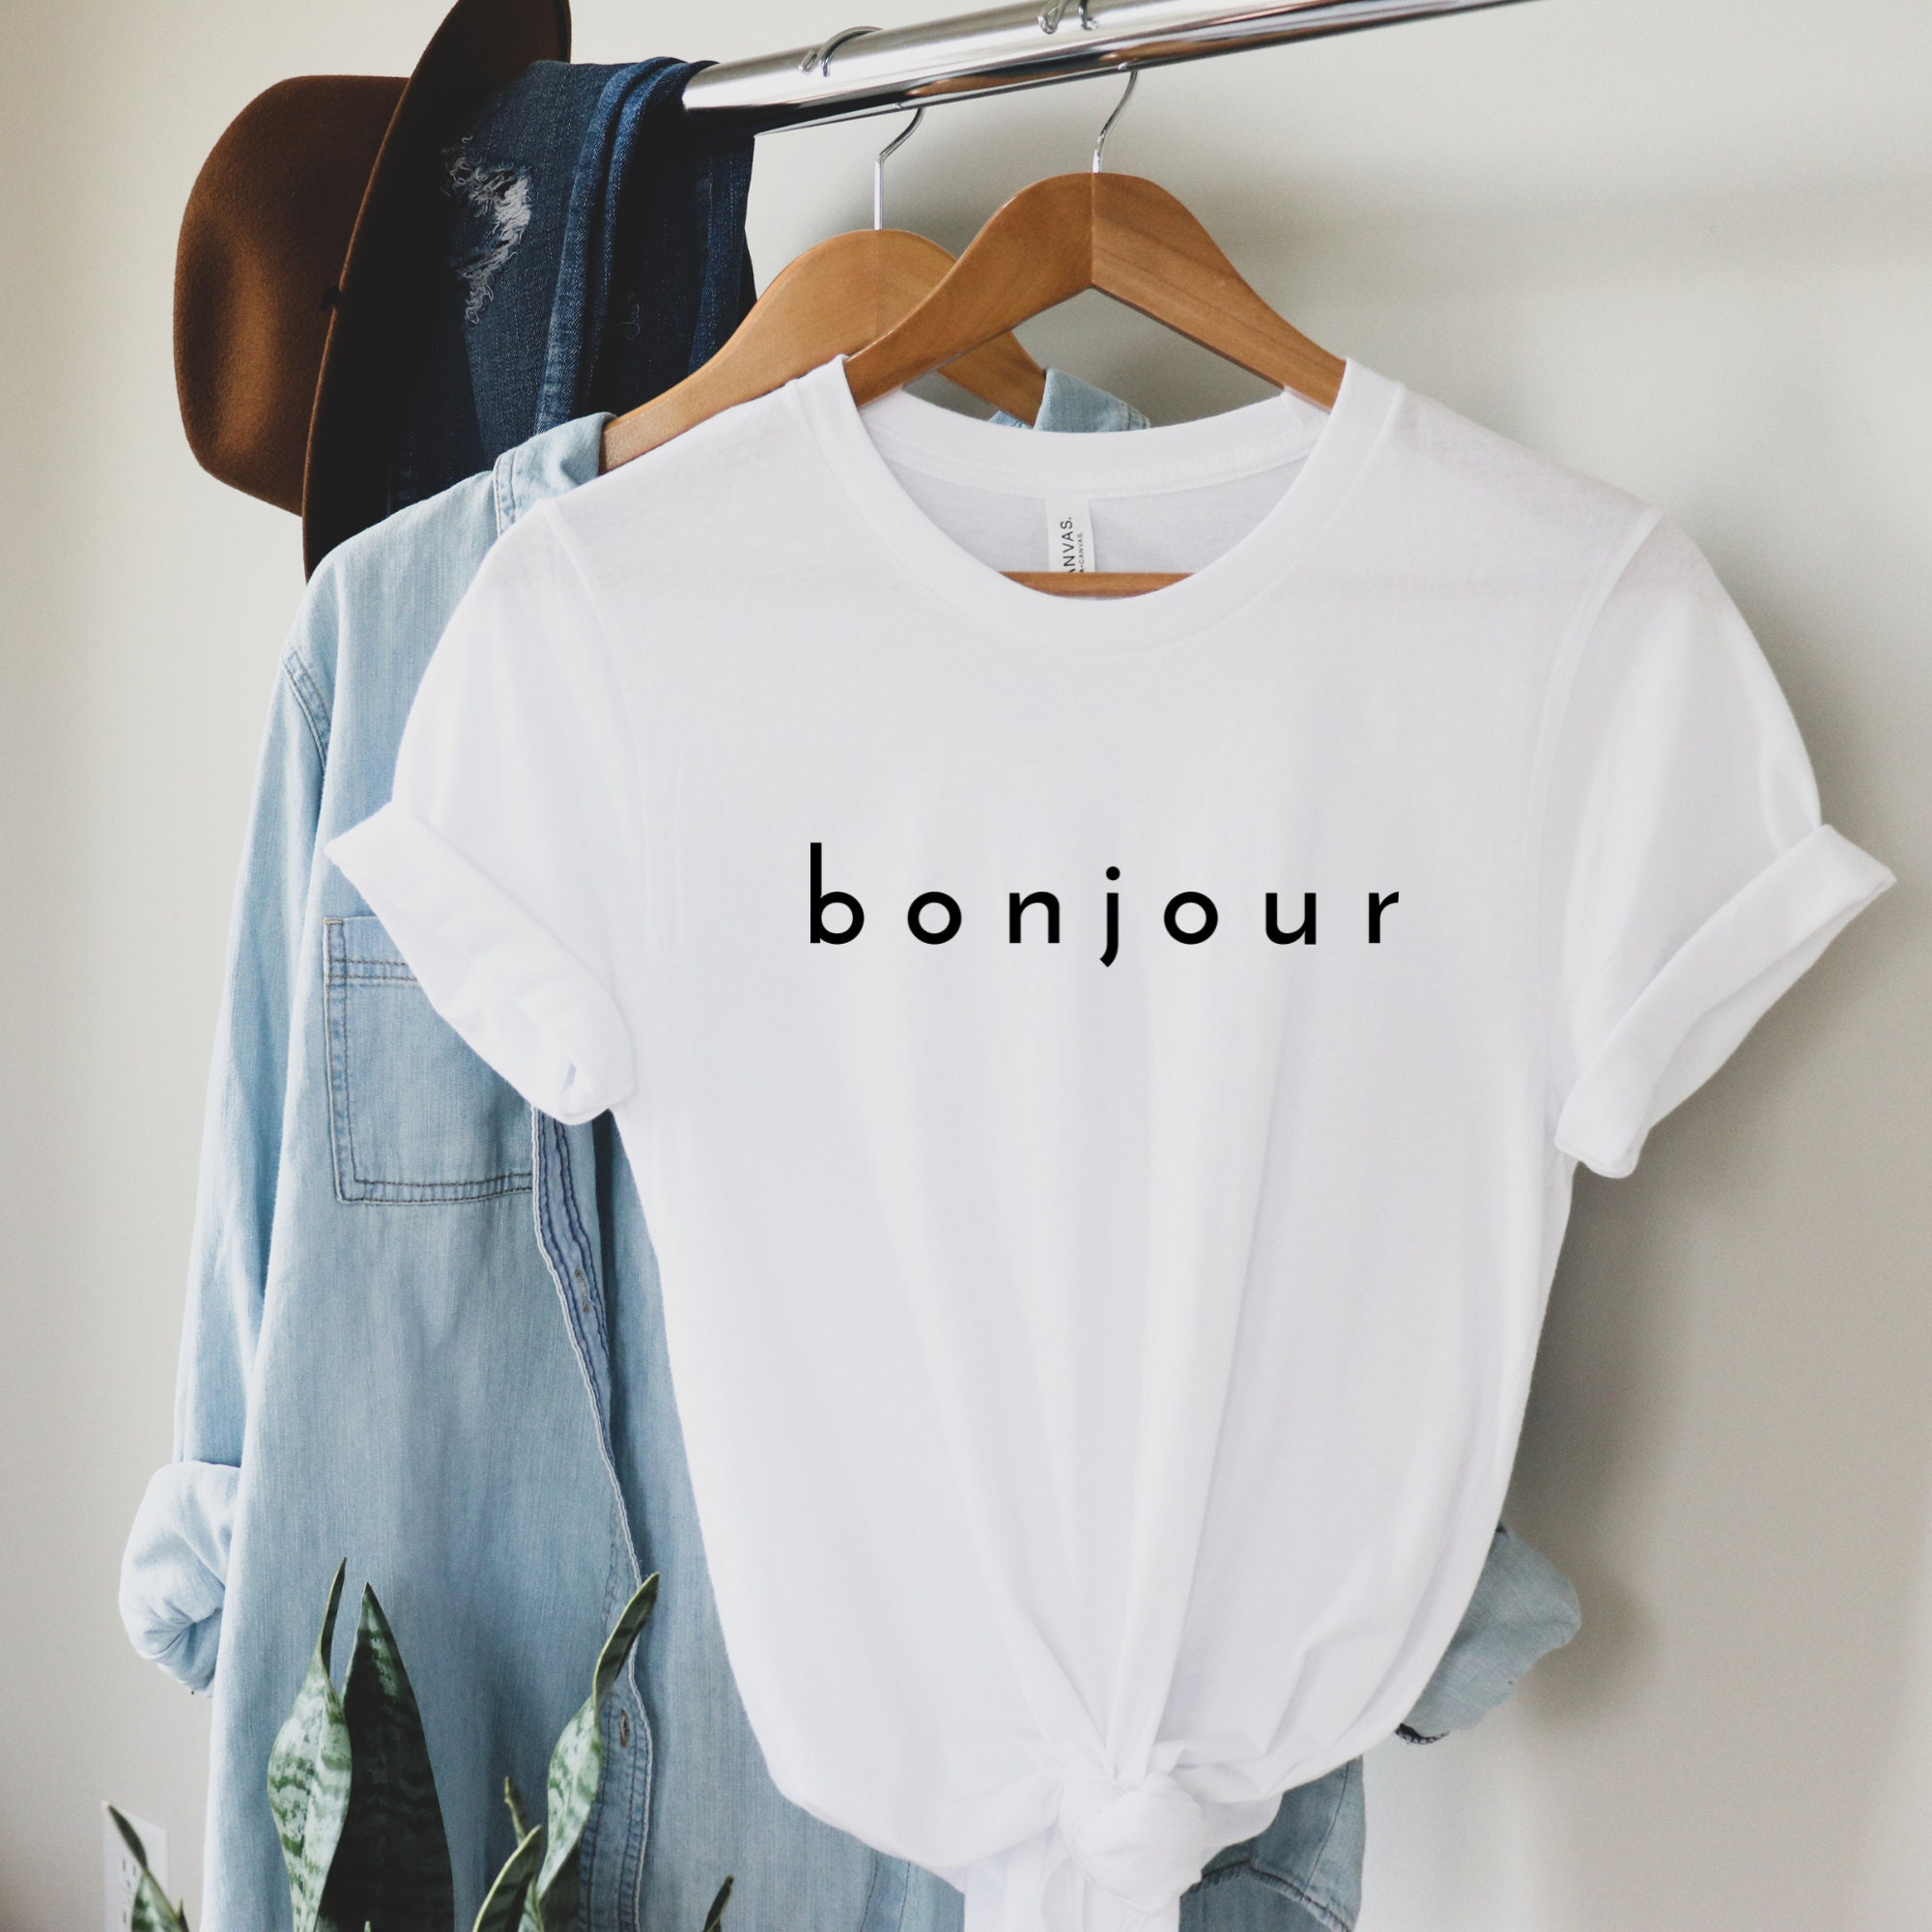 Bonjour Shirt Hello Shirt Bonjour Tee France Shirt French | Etsy